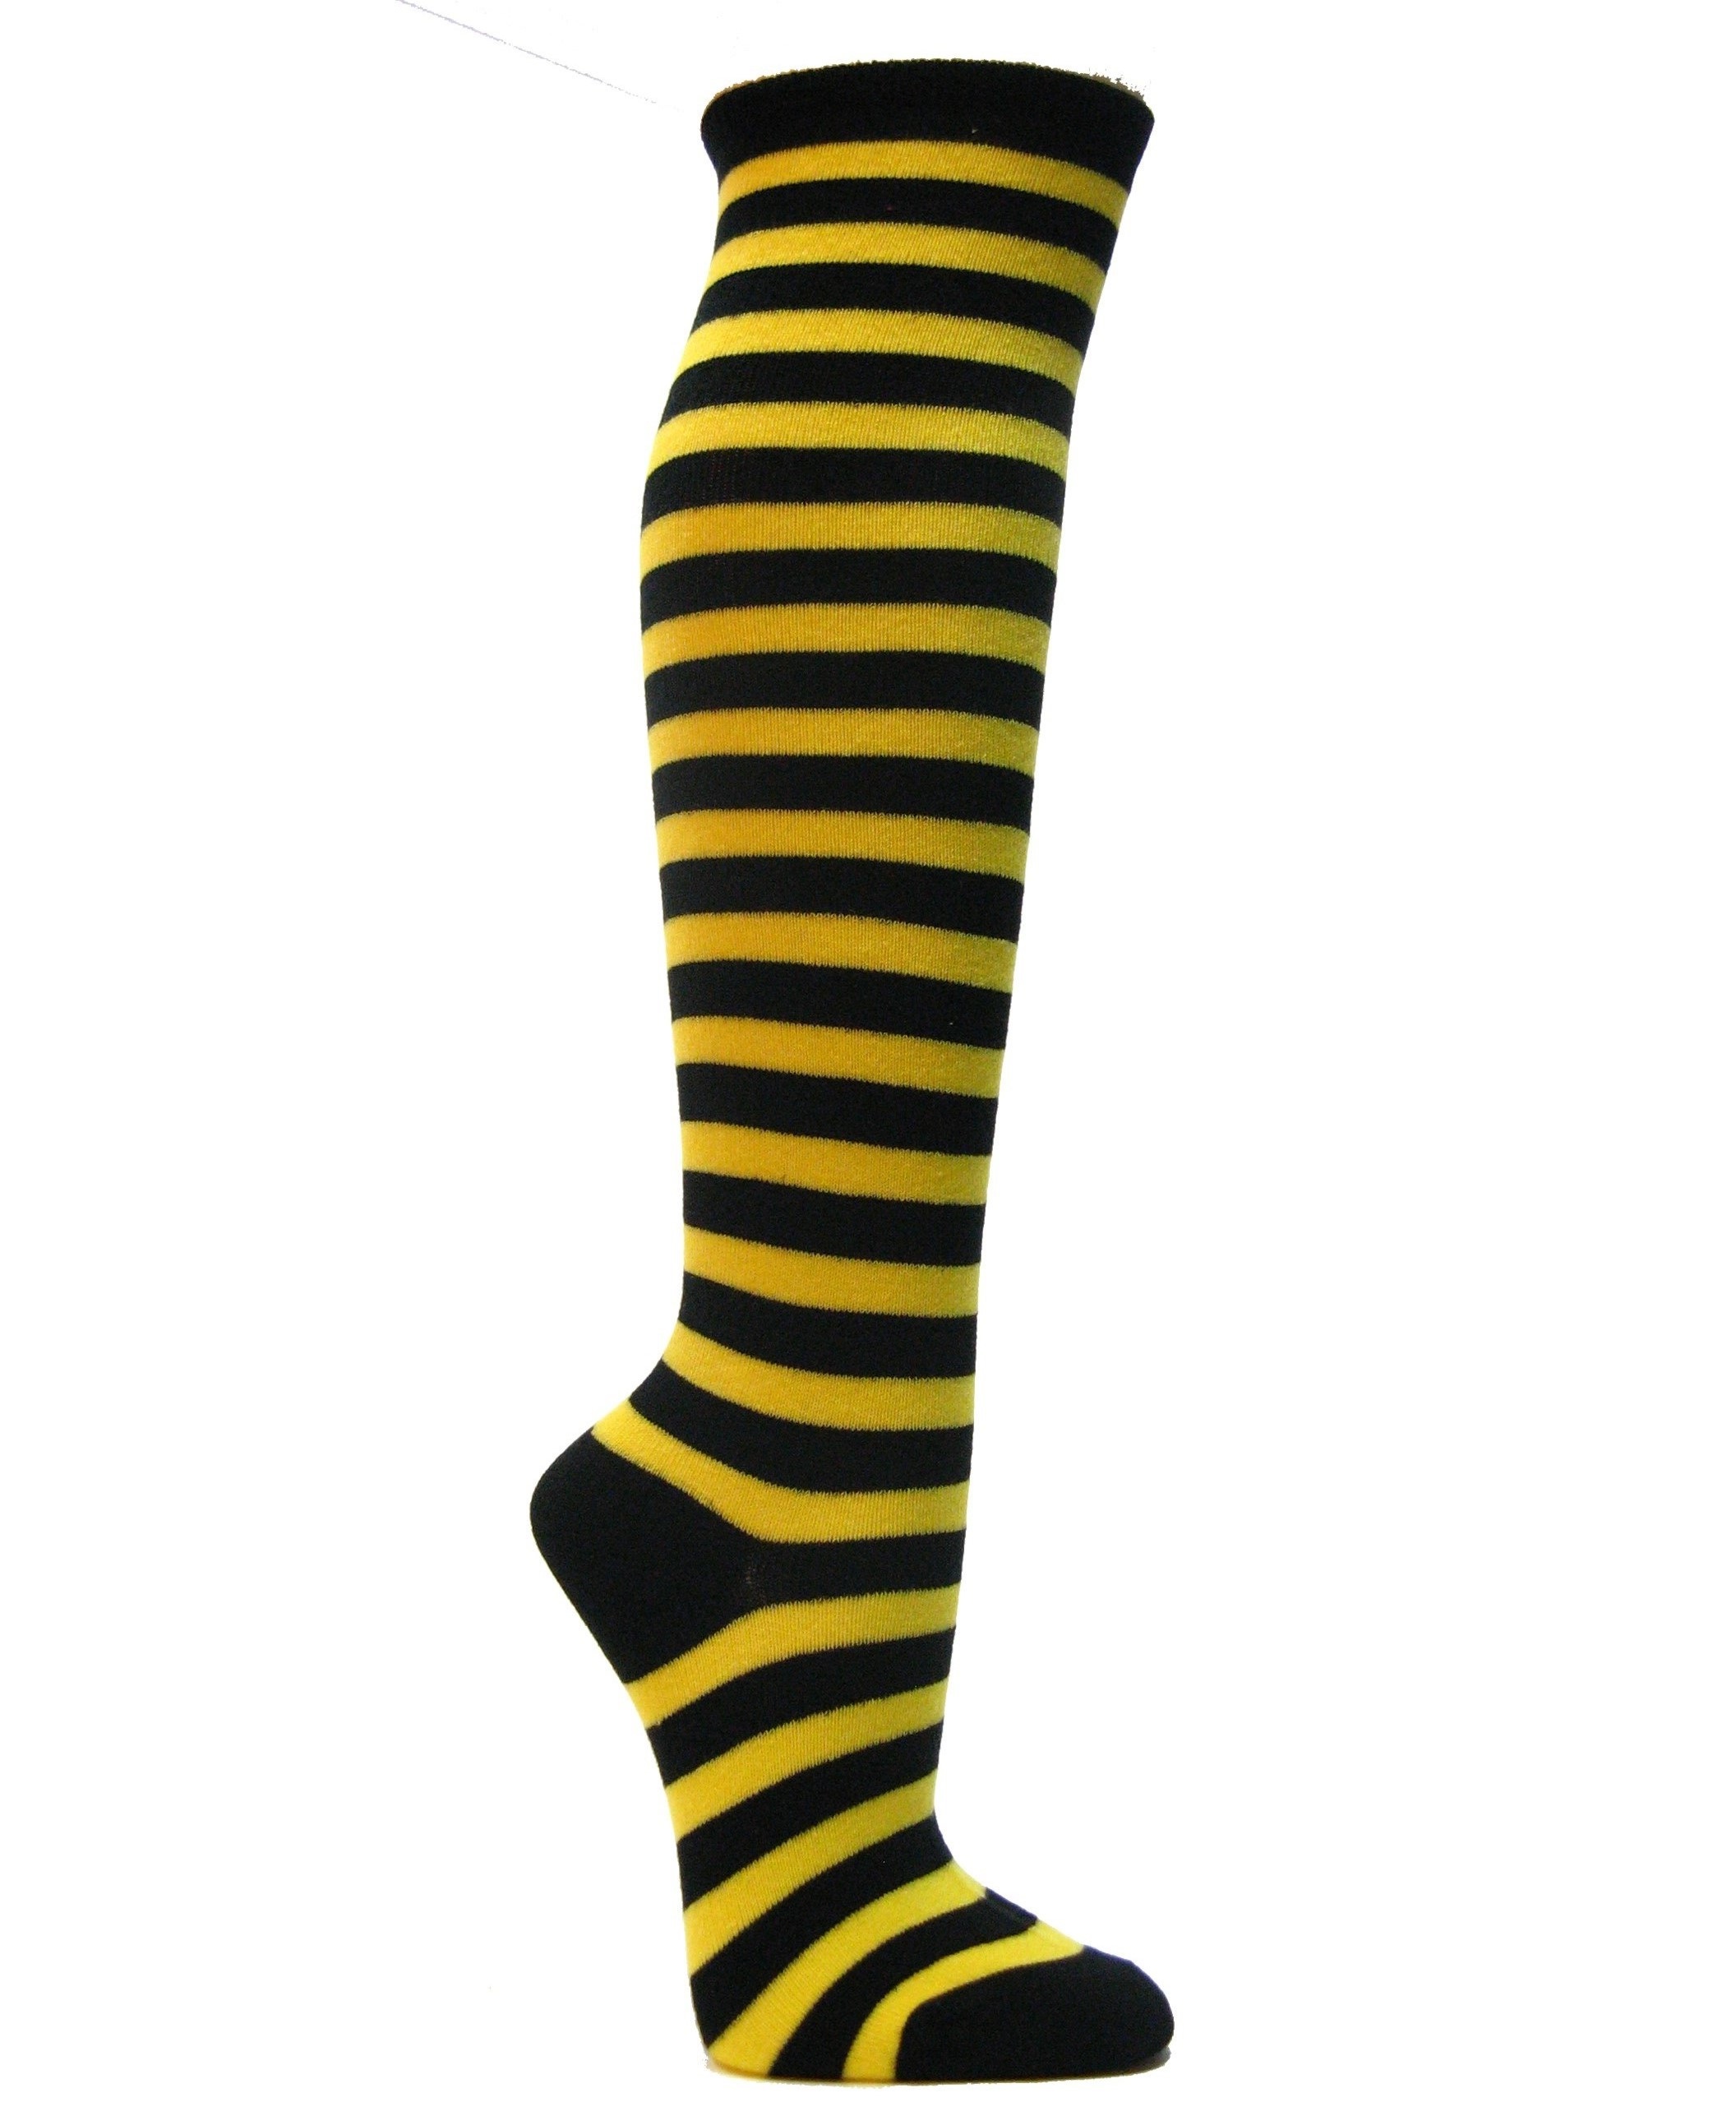 Black / Bright Yellow Stripes Women's Fashion High Socks - Click Image to Close